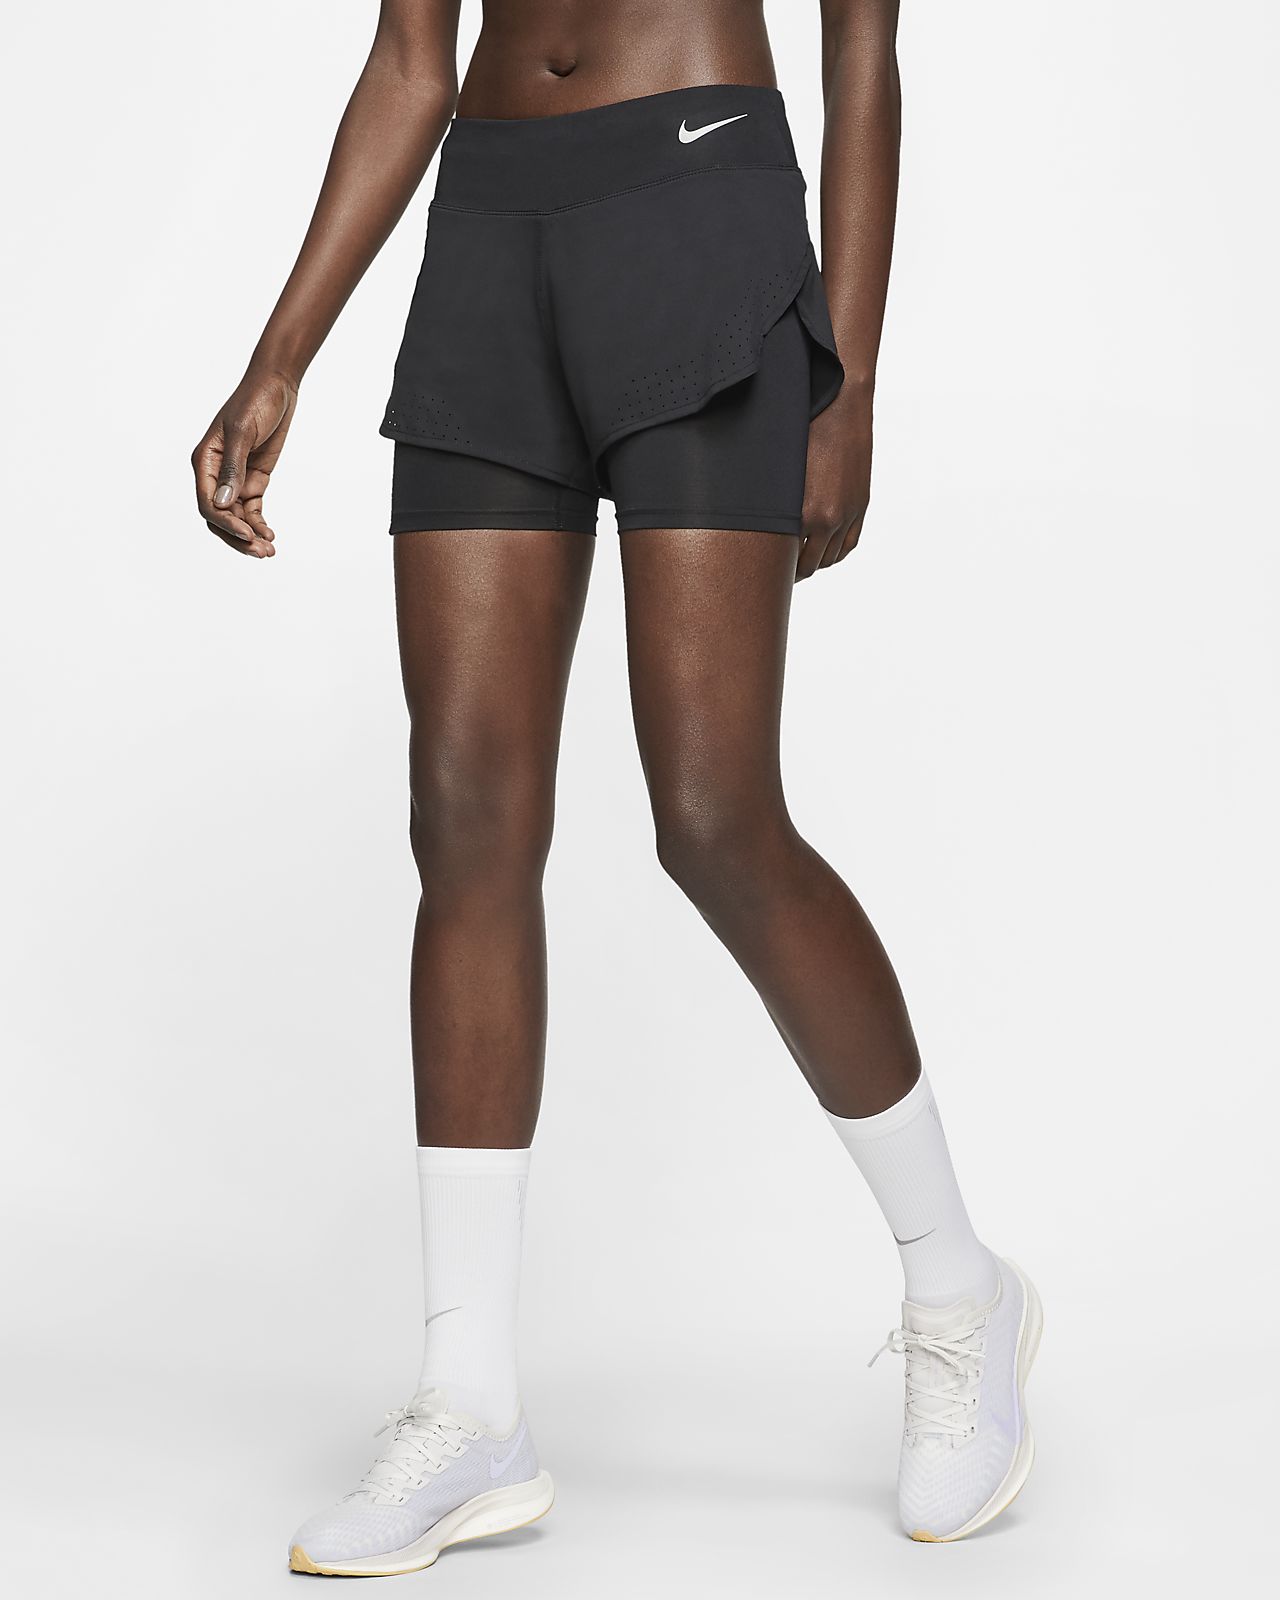 Download Nike Eclipse Women's 2-in-1 Running Shorts. Nike.com CA